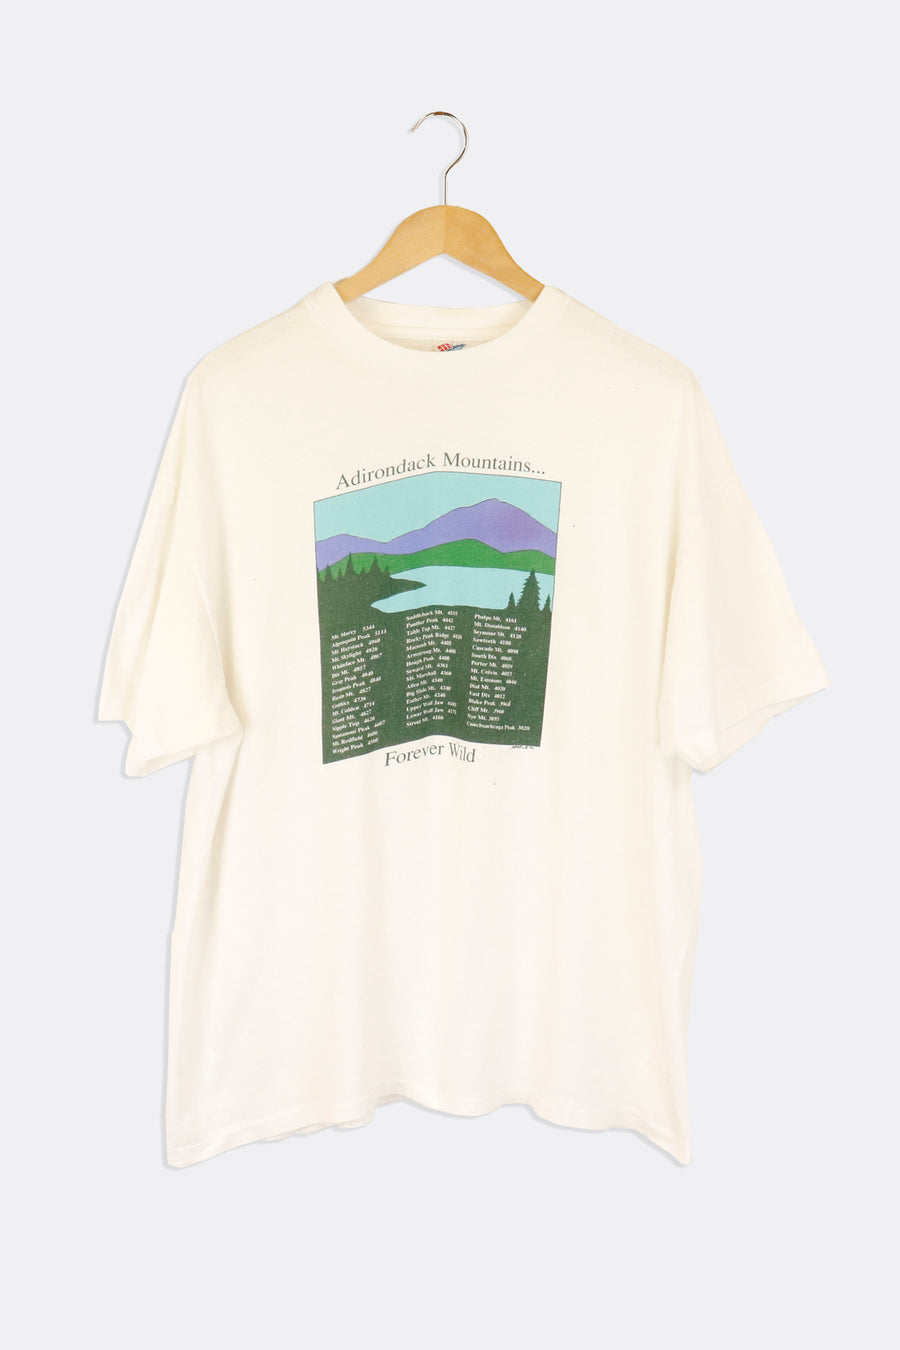 Vintage 1994 Adirondack Mountains List Of Peaks Graphic T Shirt Sz XL